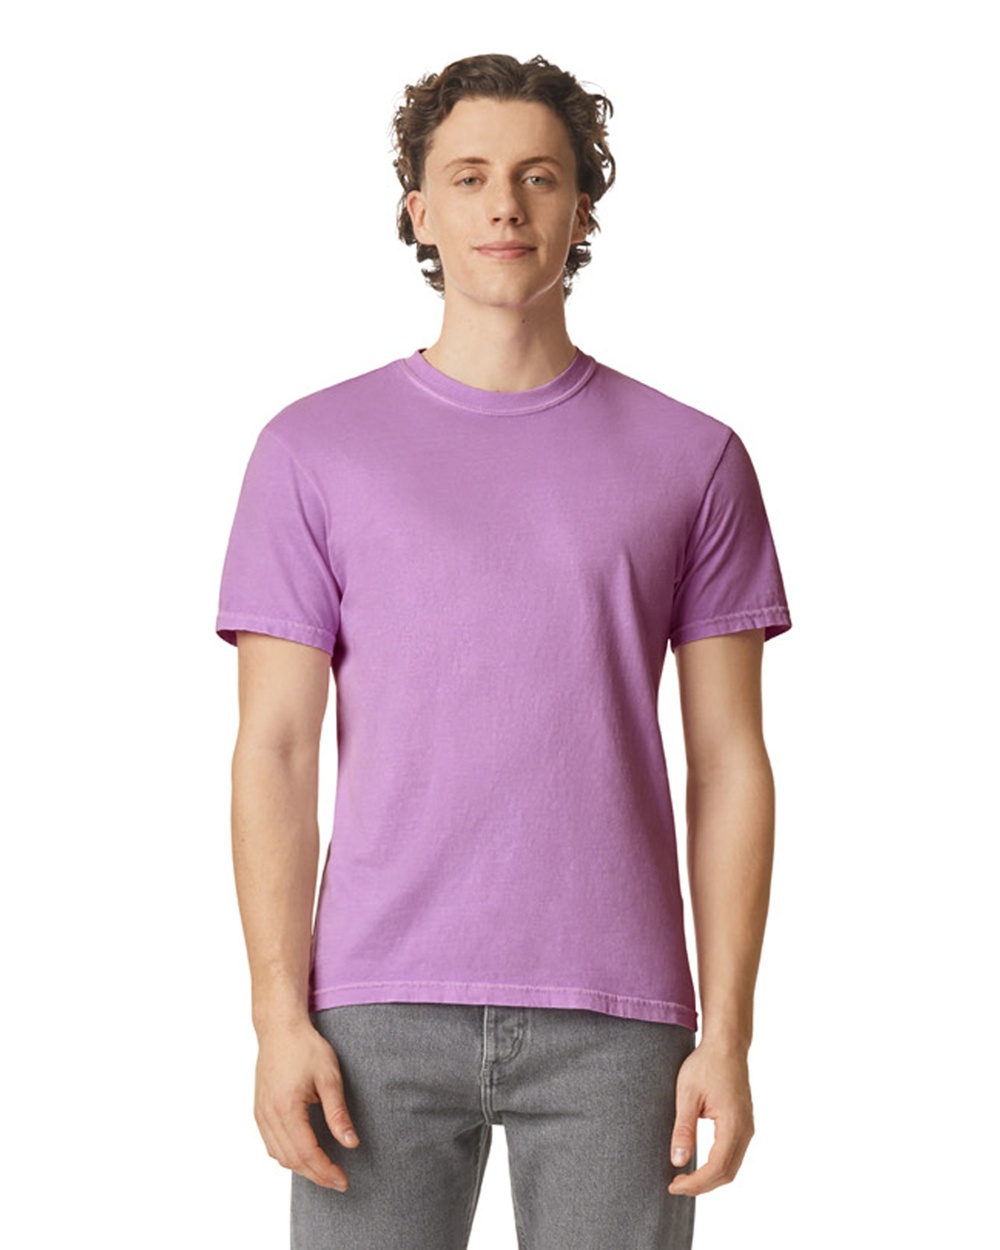 Comfort Color Everglades T-shirt Light Purple - Everglades Foods, Inc.